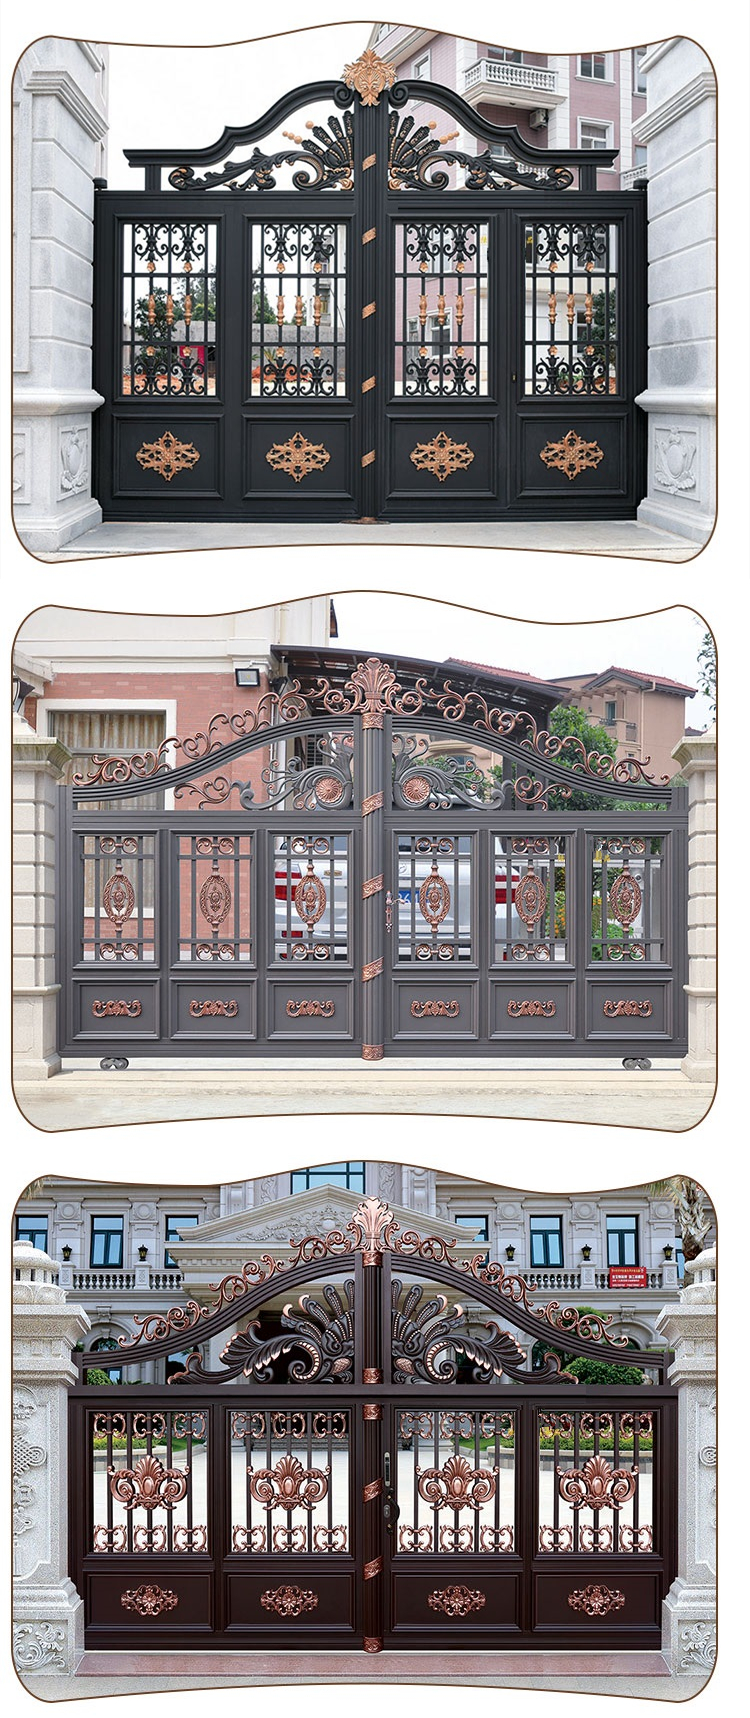 CBMMART high quality Aluminium gate customized house main gate designs